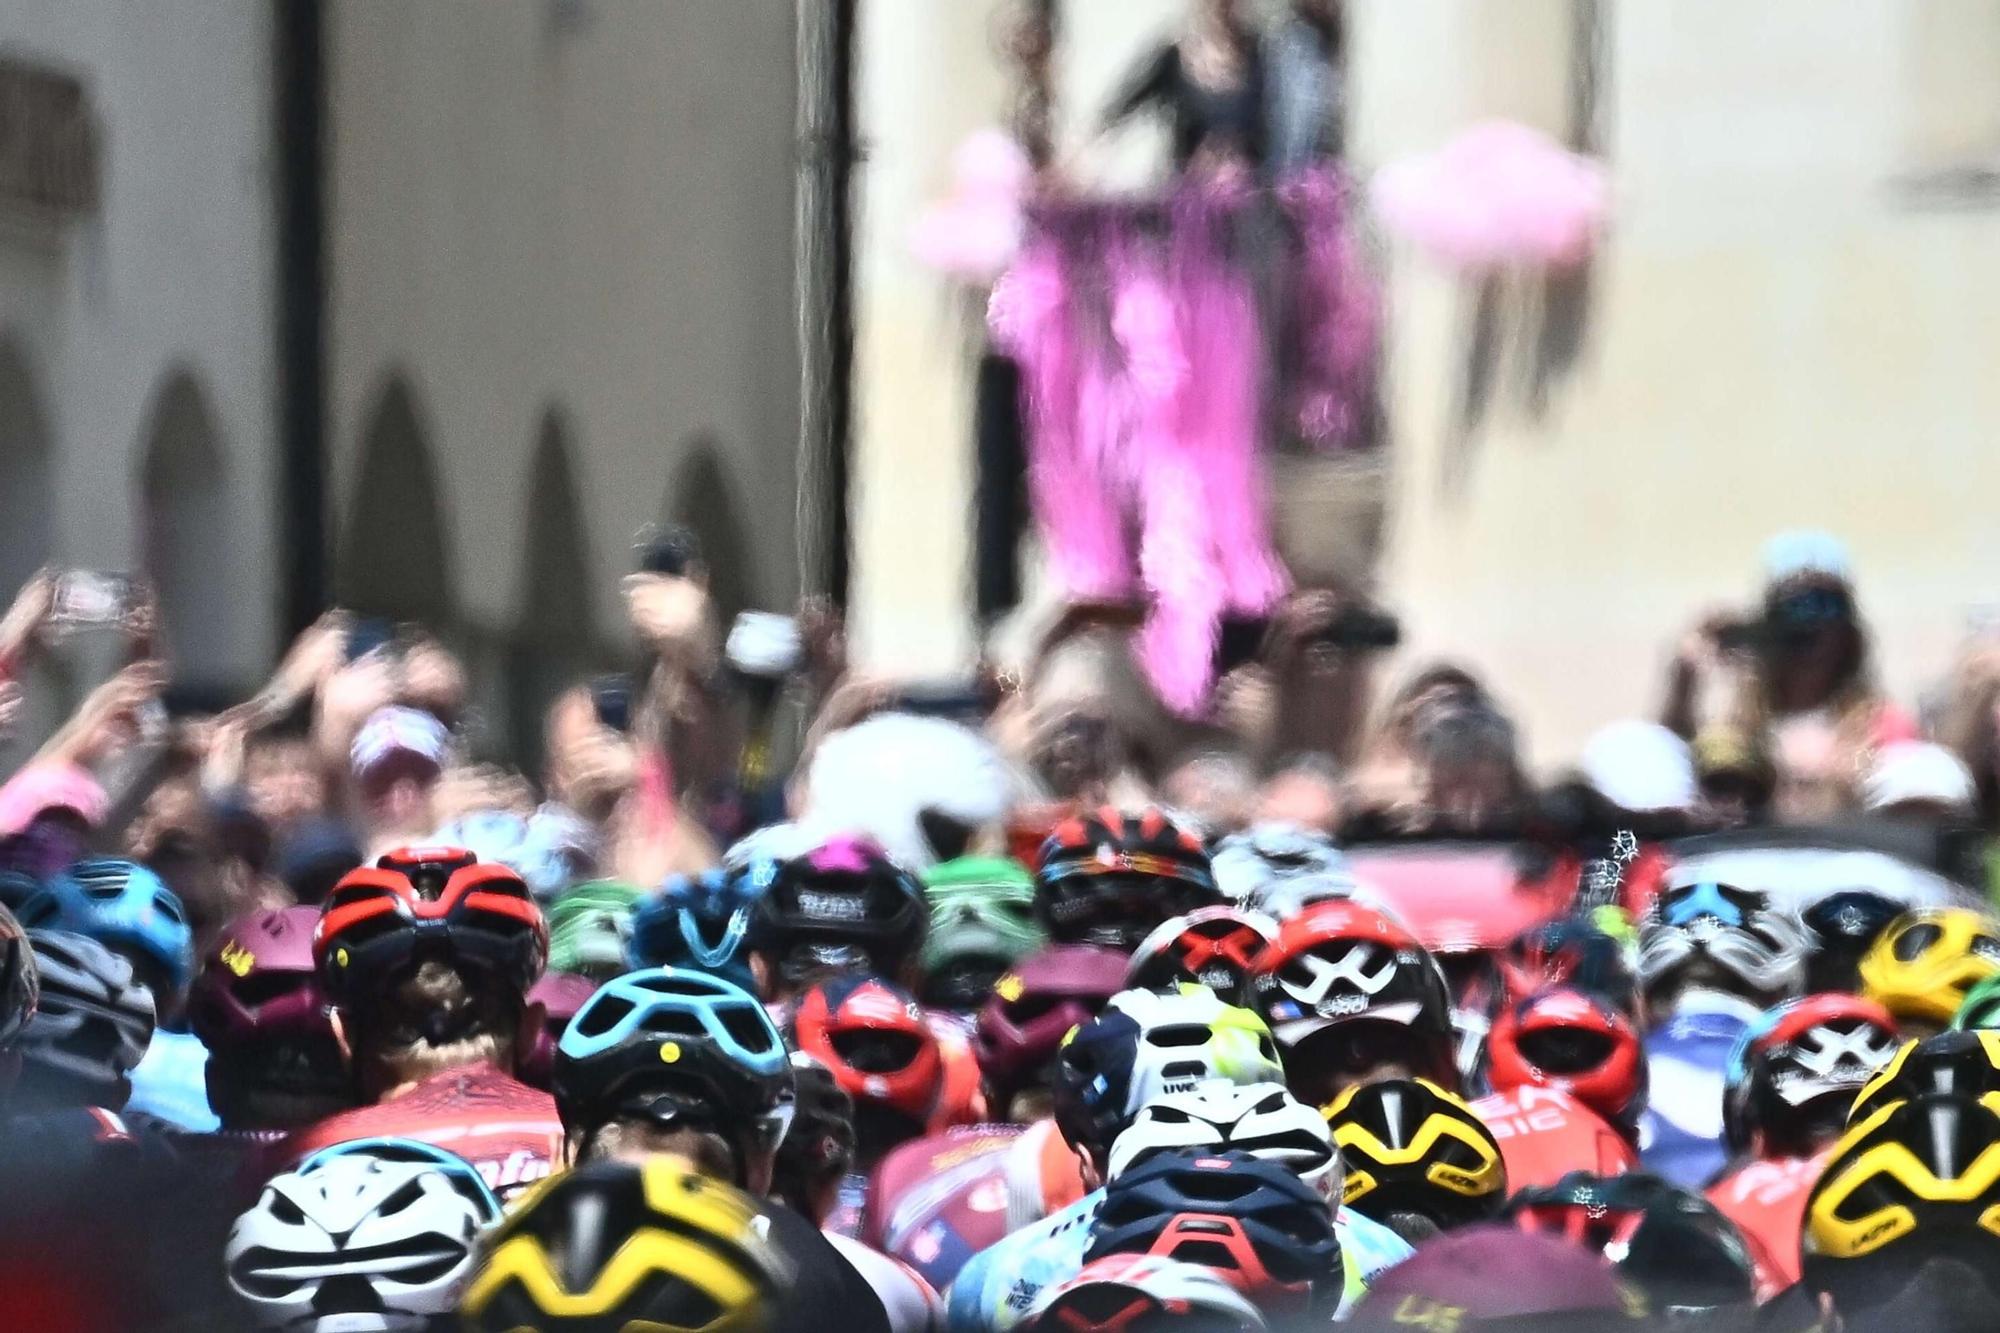 Giro d'Italia - 18th stage